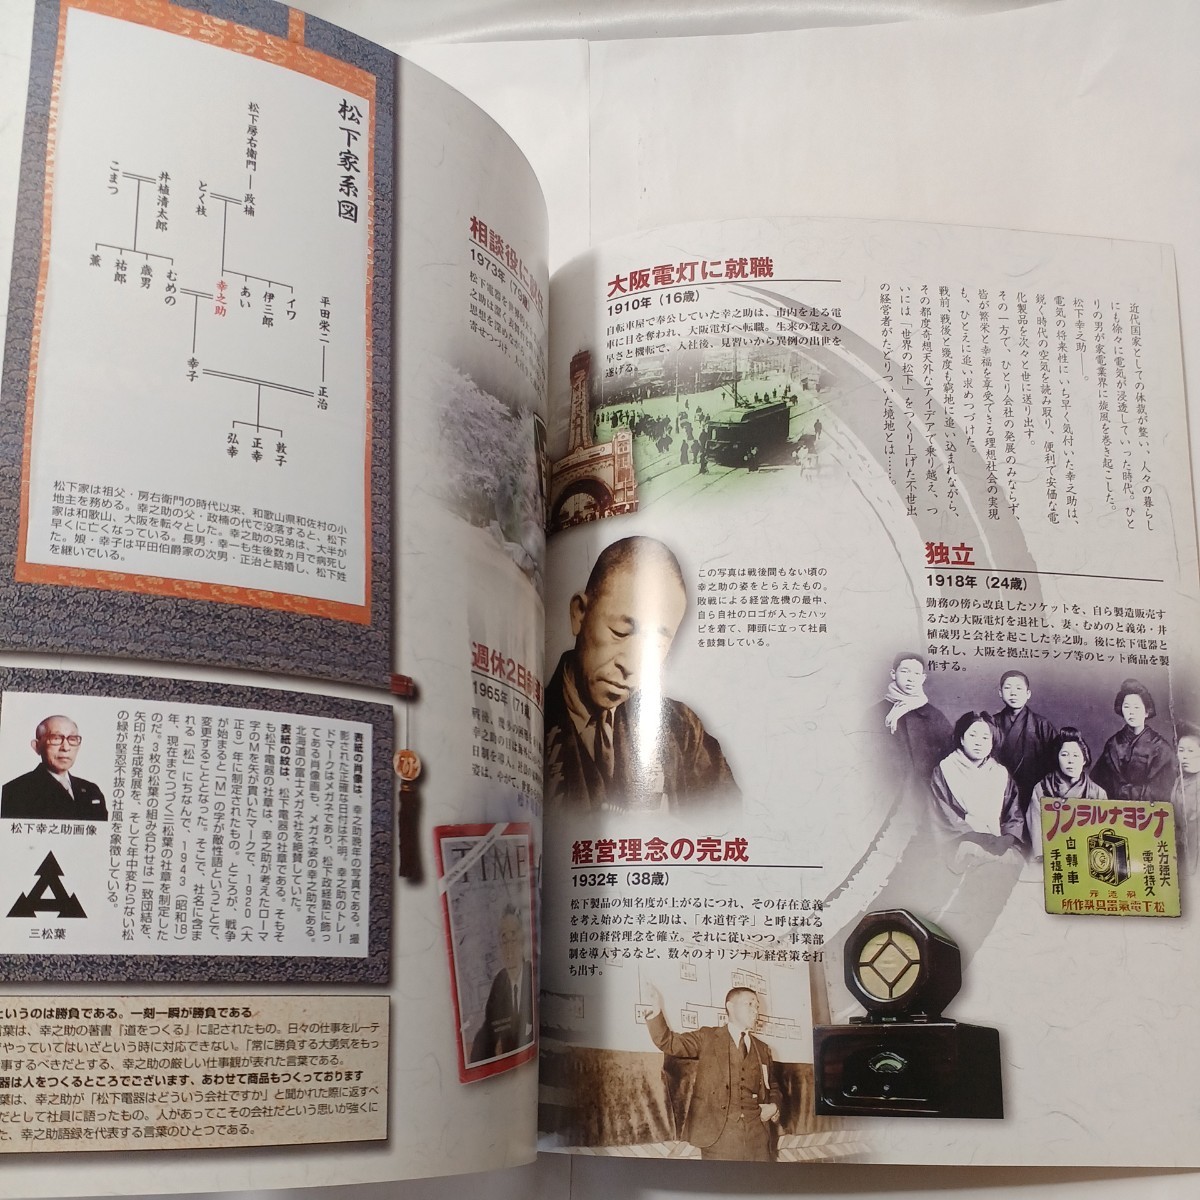 zaa-484♪歴史を作った先人たち日本の100人シリーズ 2冊 『松下幸之助』『本田宗一郎』_画像3